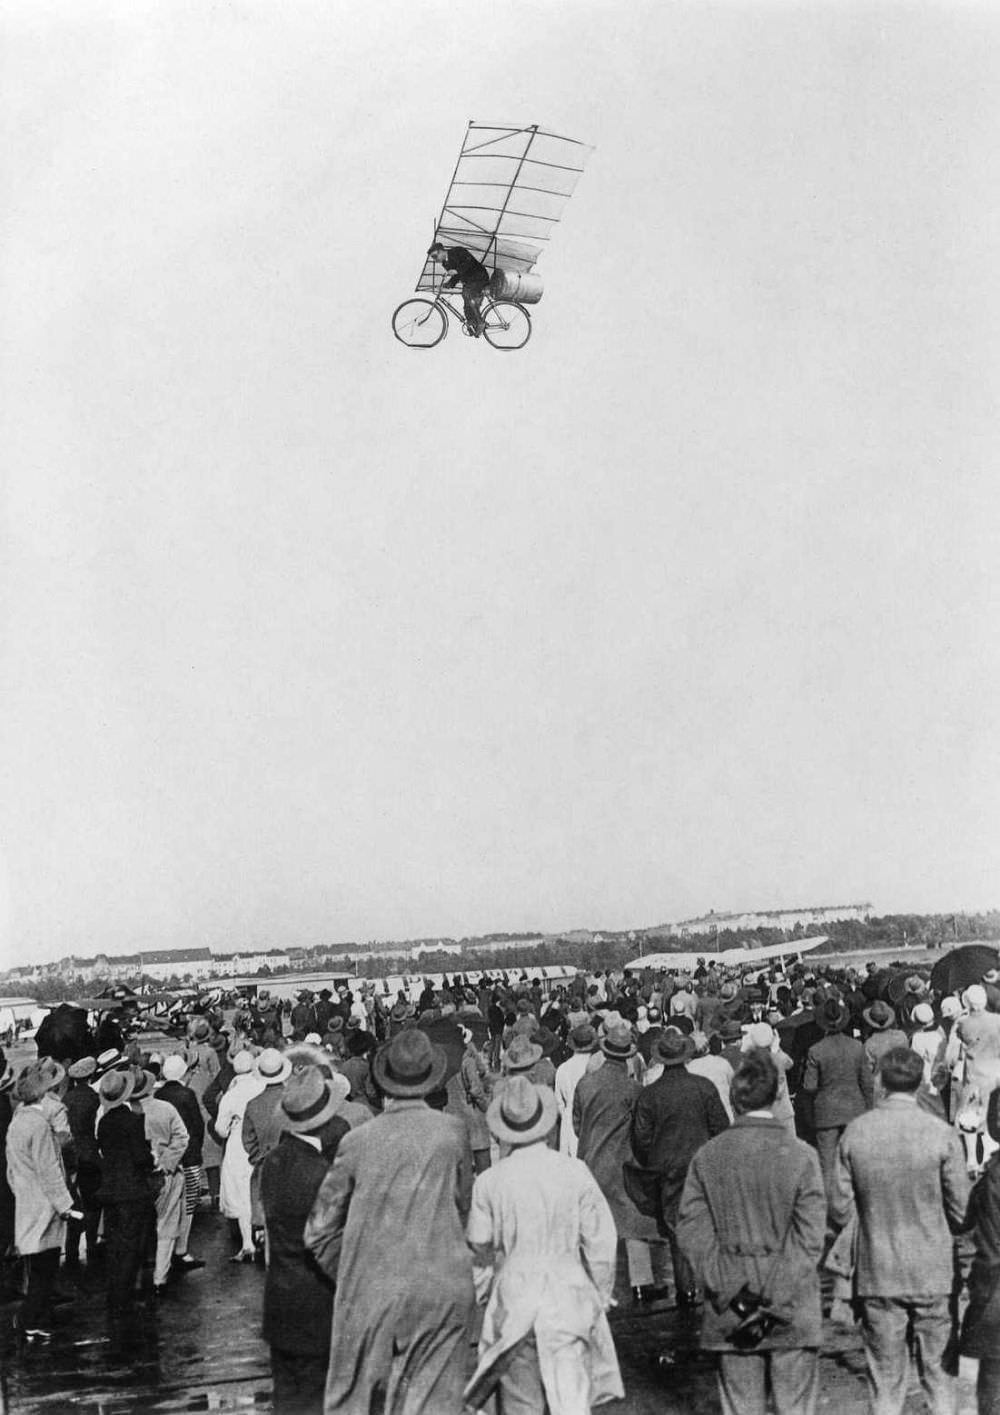 The Flight of Fancy: Max Wiedenhöft and His Illustrious Rocket-Powered Bike